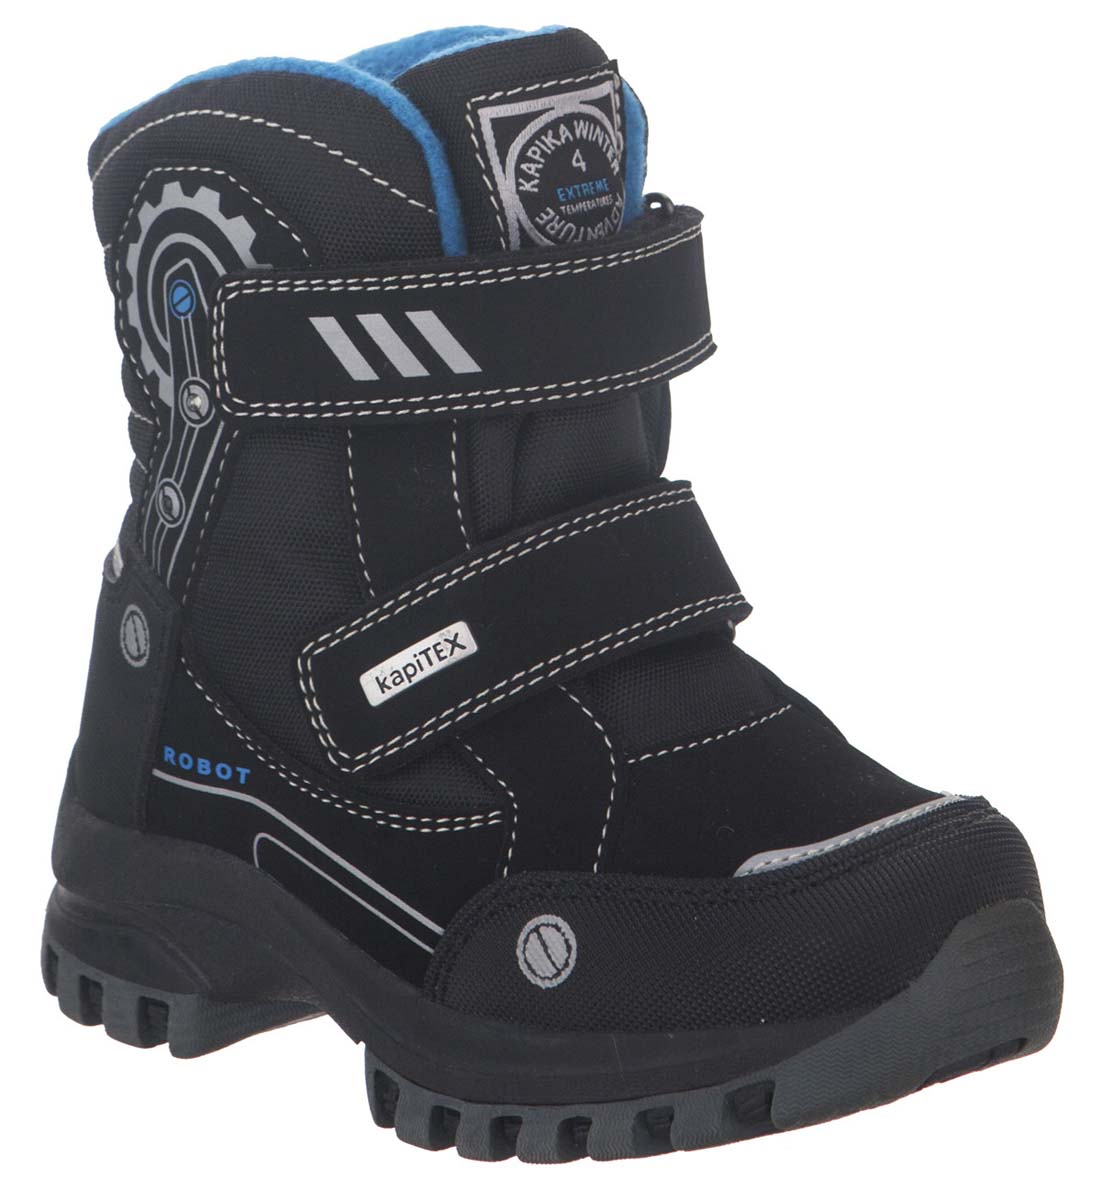 Ботинки для мальчика Kapika KapiTEX, цвет: черный, синий. 41188-1. Размер 24